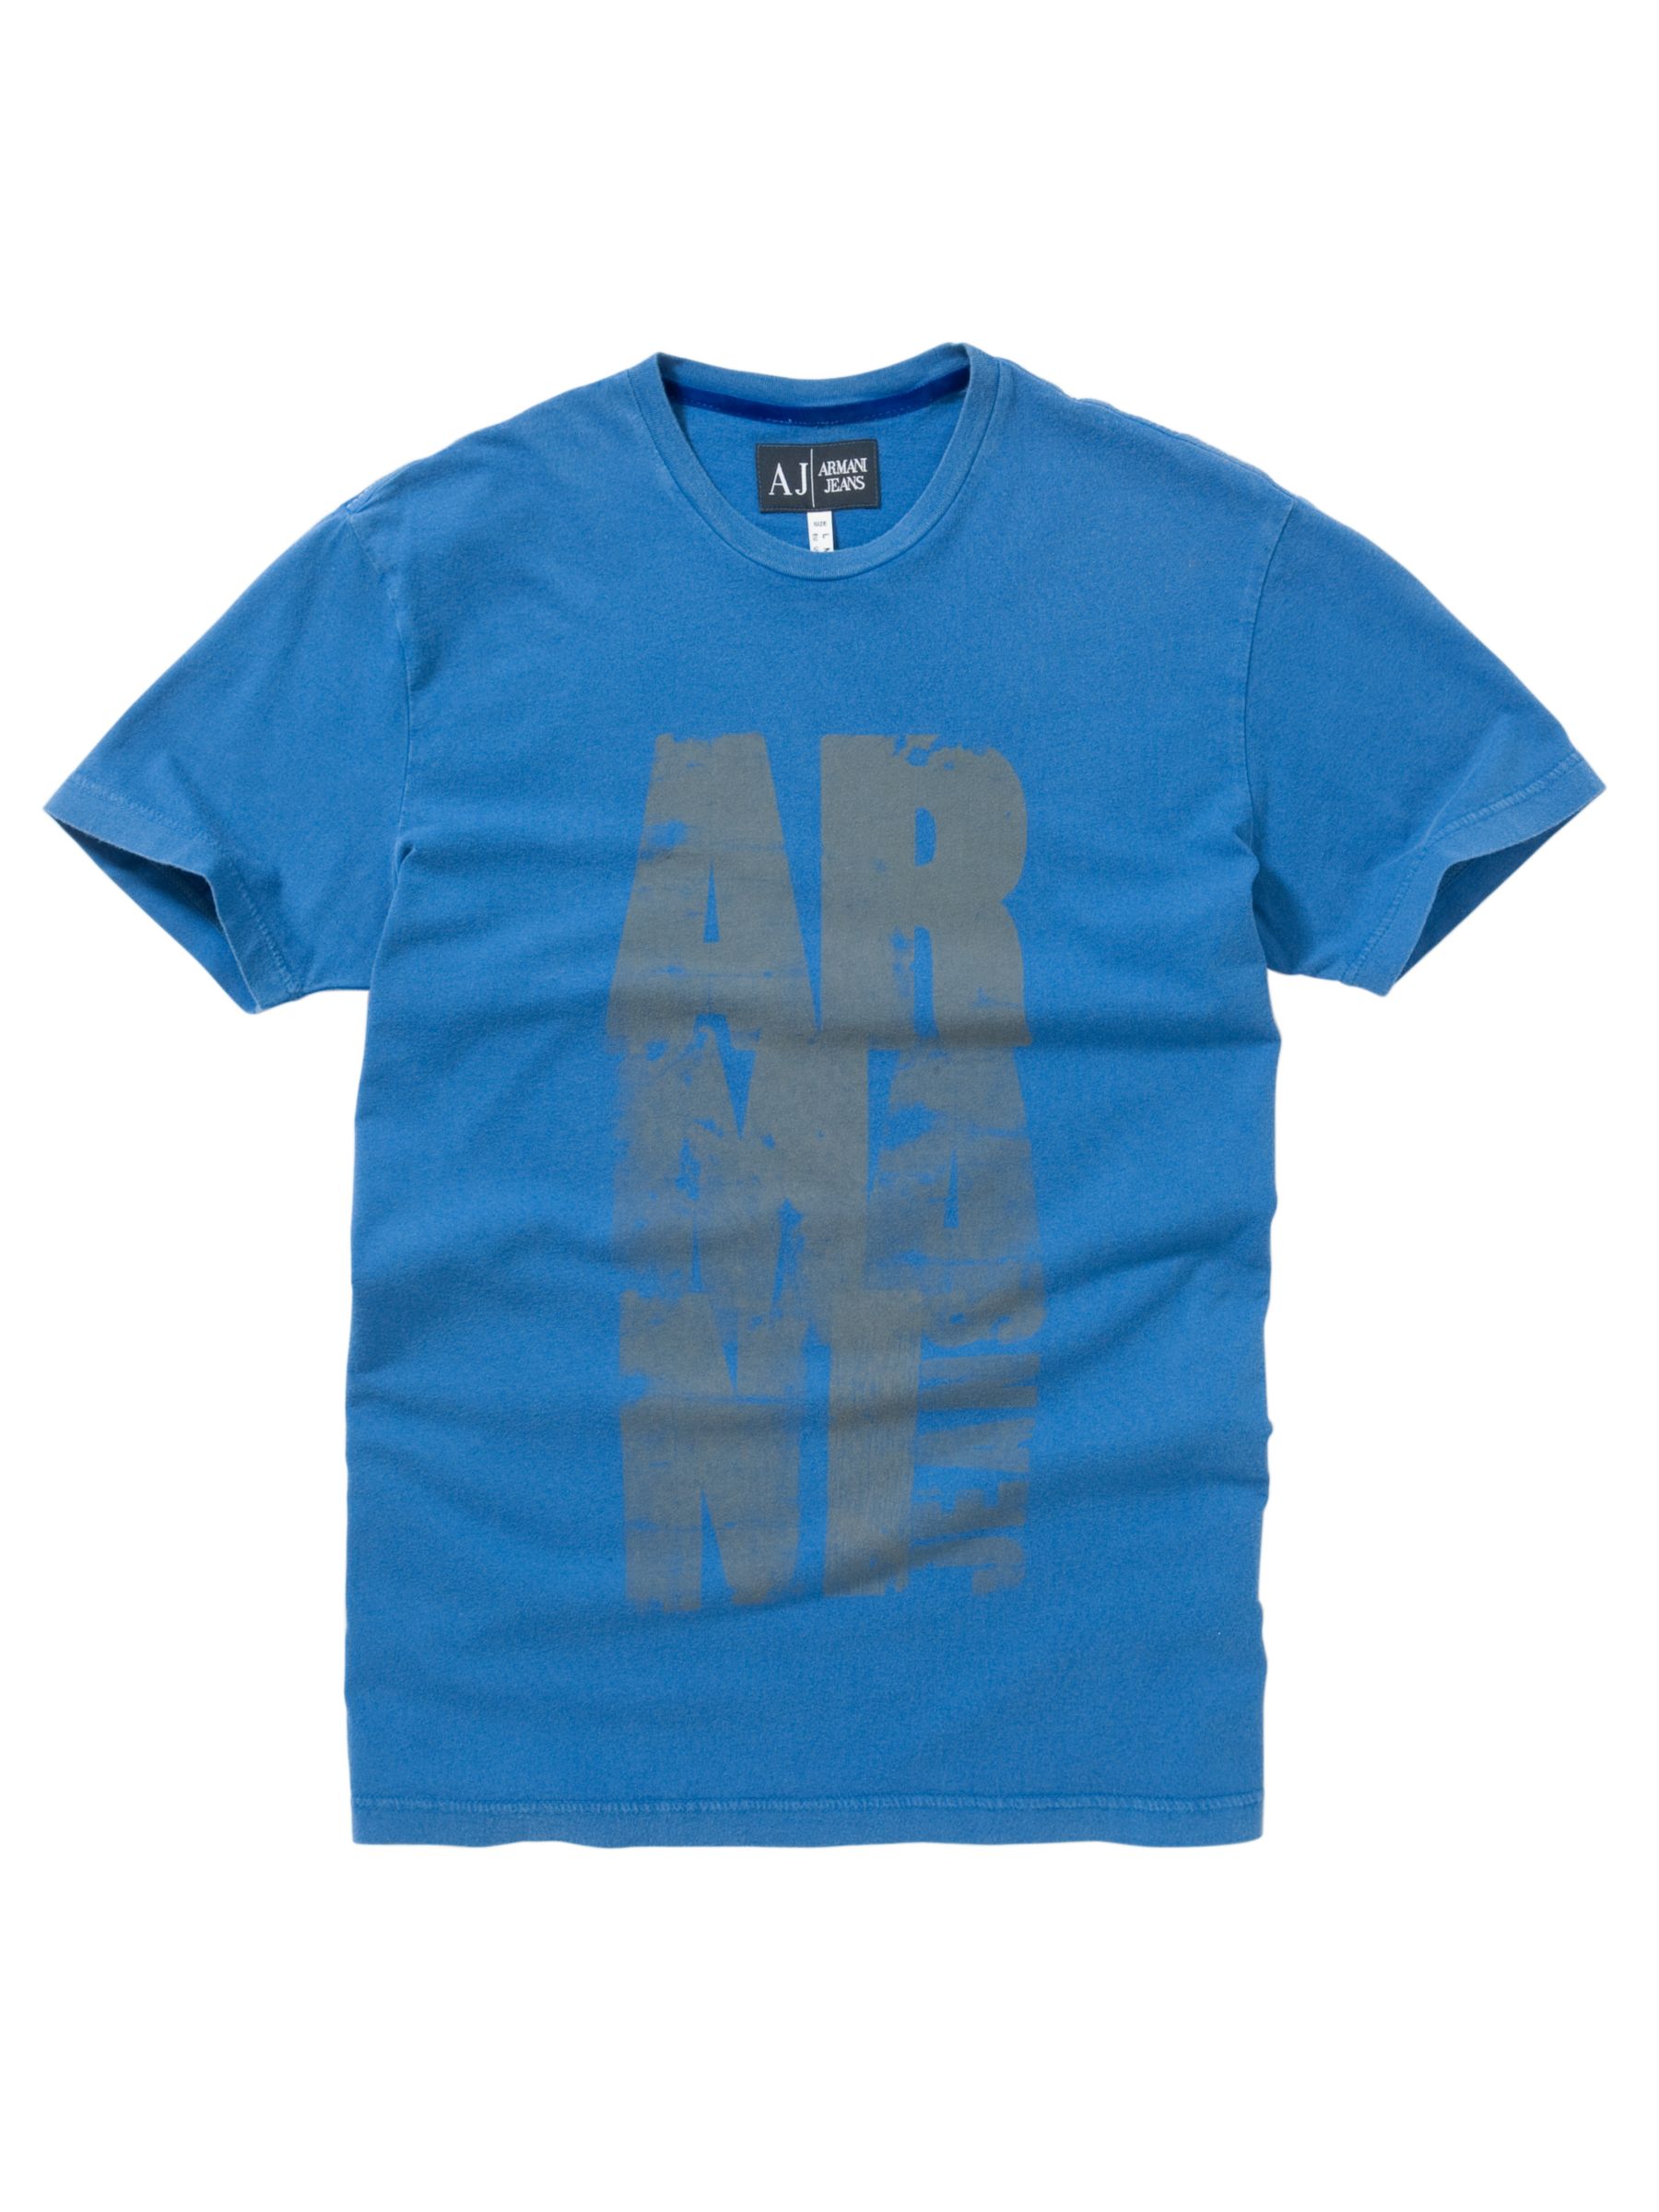 Armani Jeans Large Block Print Crew T-Shirt,